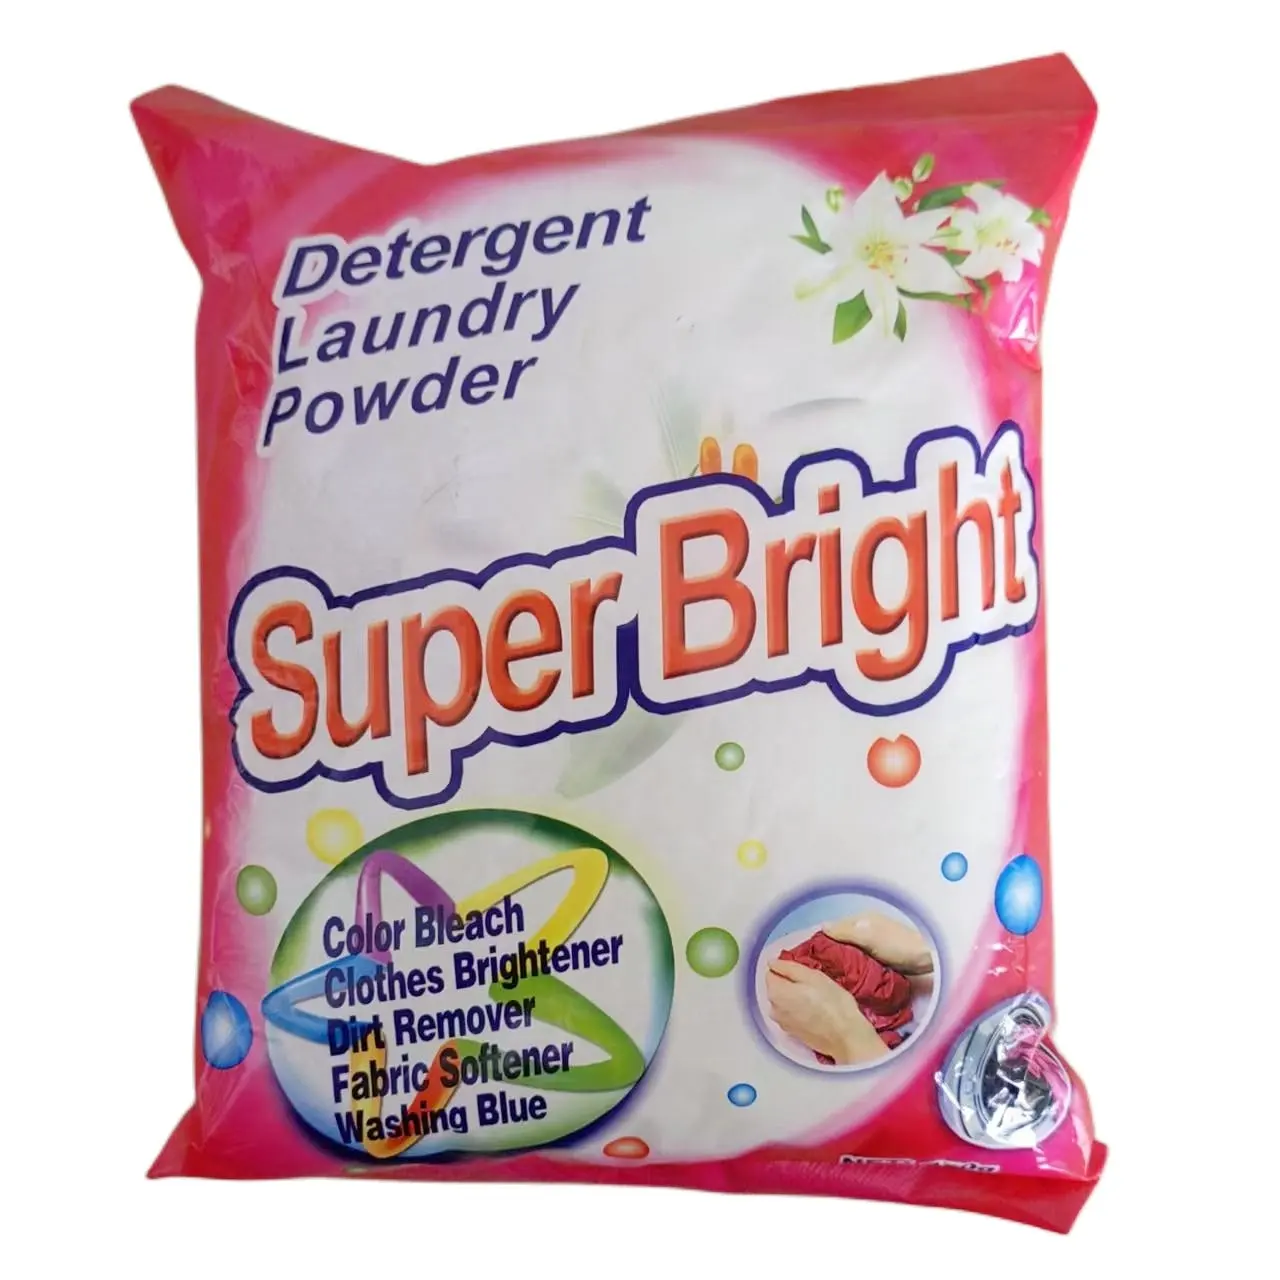 Ever Bright brand washing powder to Pakistan market